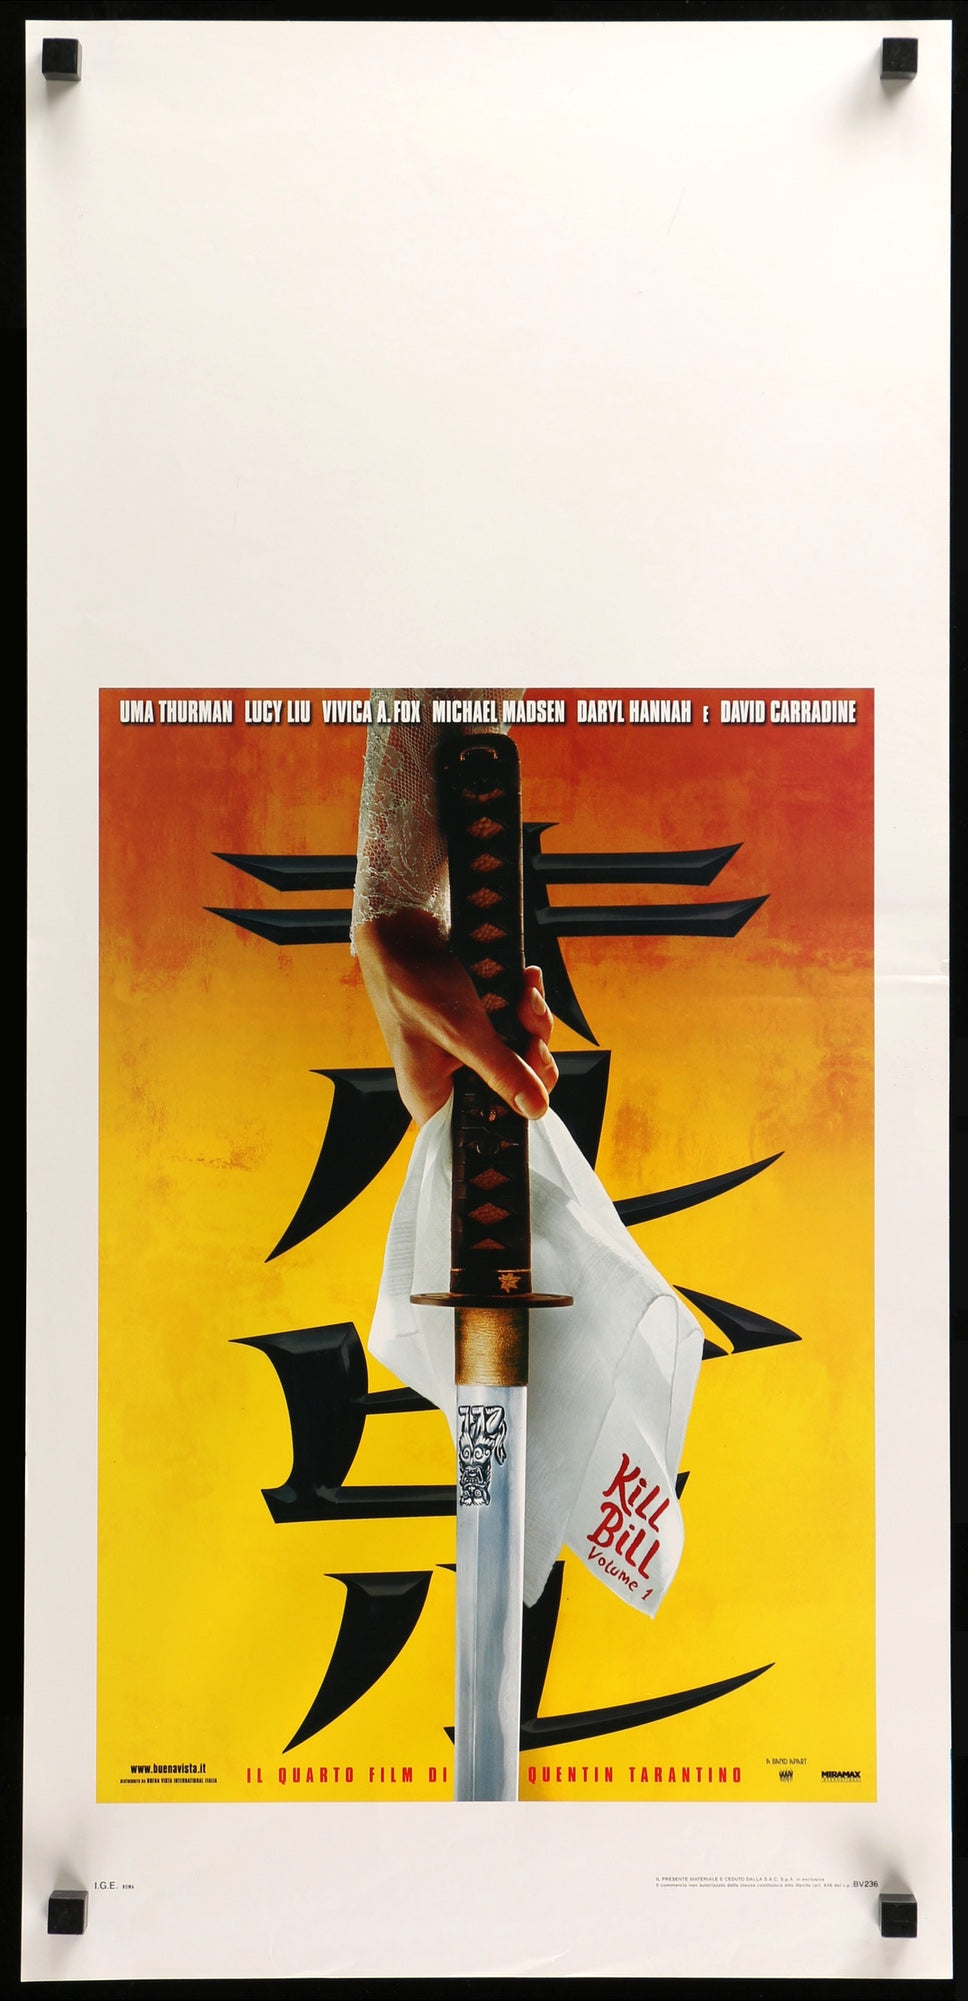 Kill Bill: Vol. 1 (2003) original movie poster for sale at Original Film Art